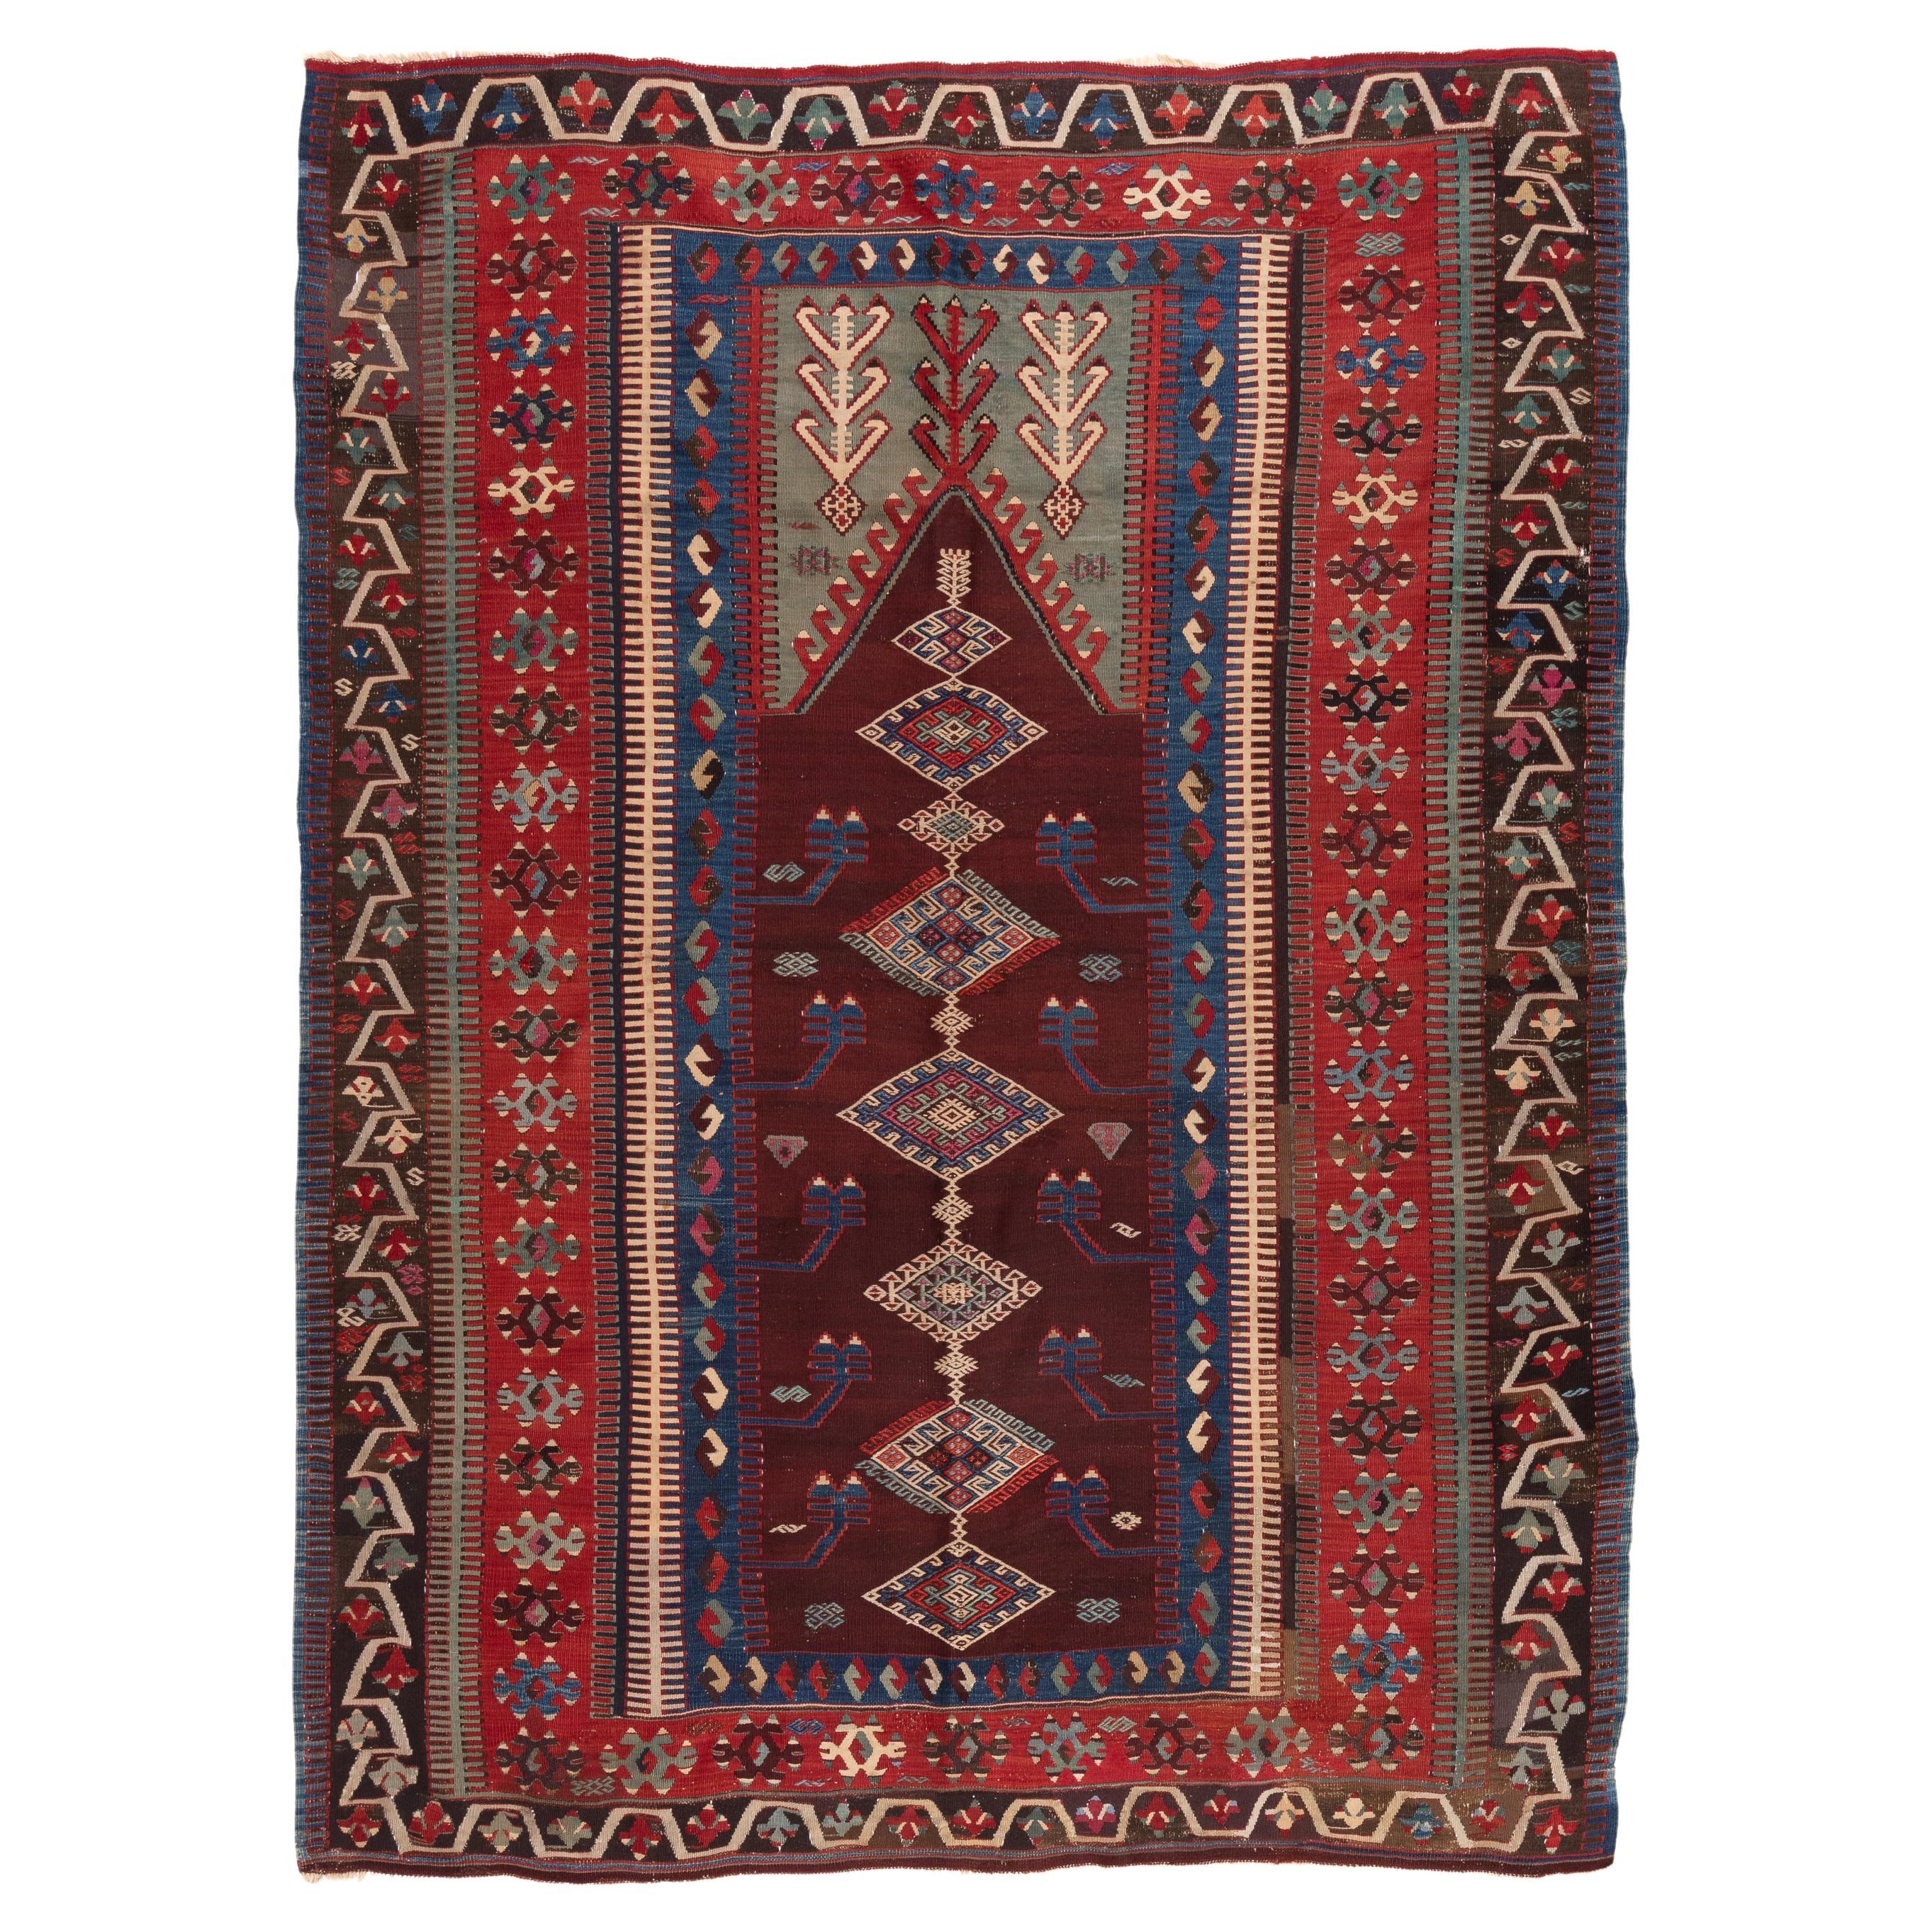 Antique Konya Obruk Kilim Central Anatolian Rug Turkish Carpet Rare Purple Color For Sale